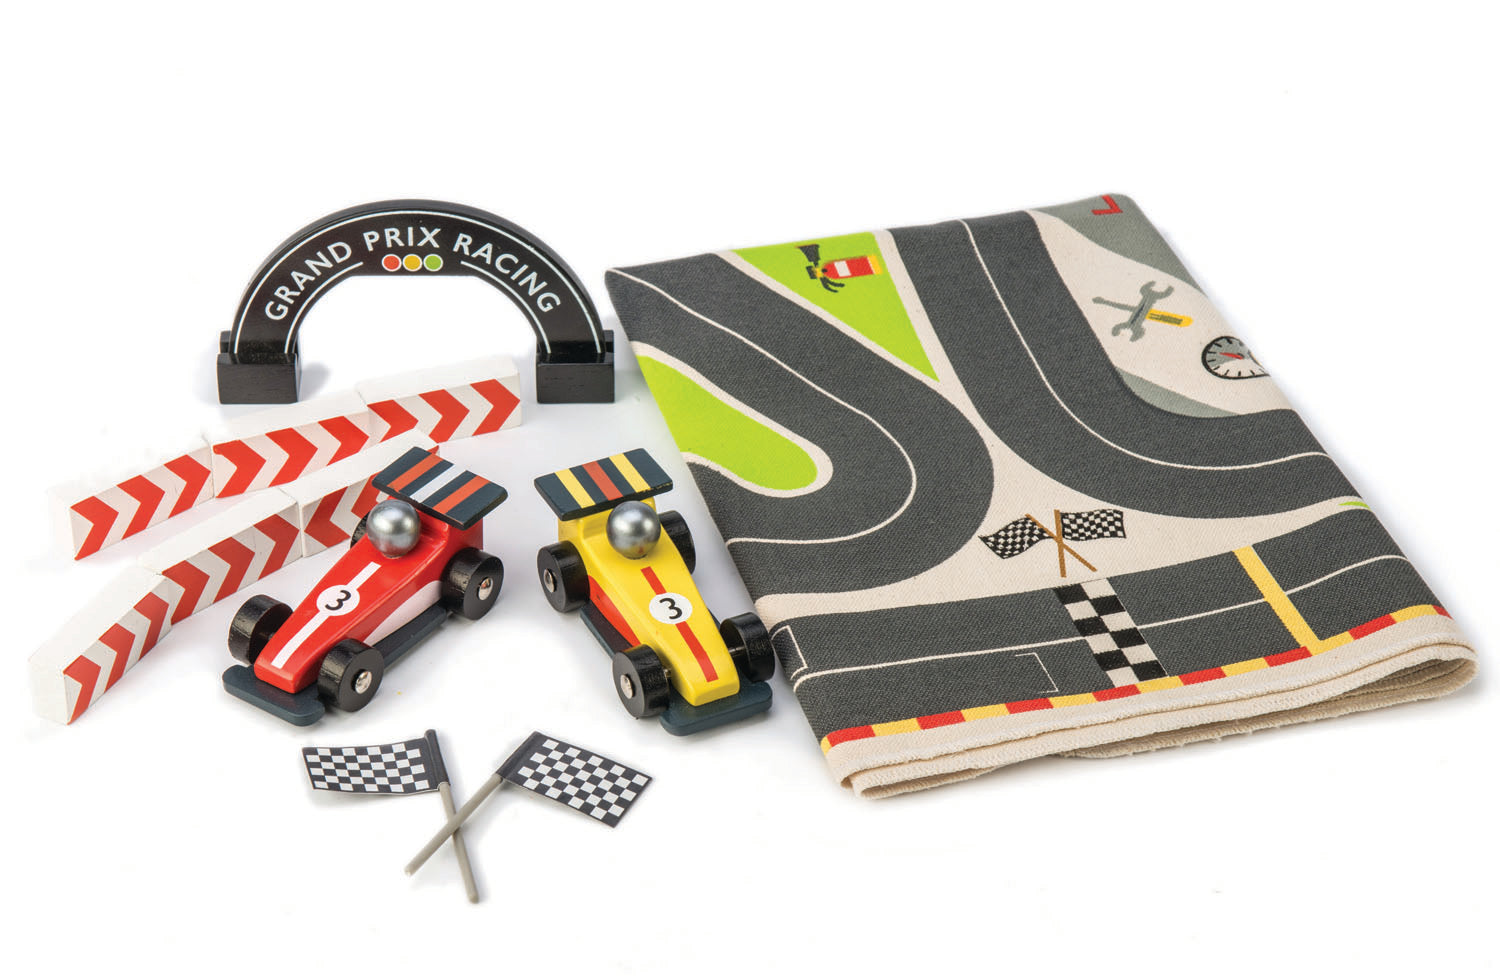 Formula One Racing Playmat